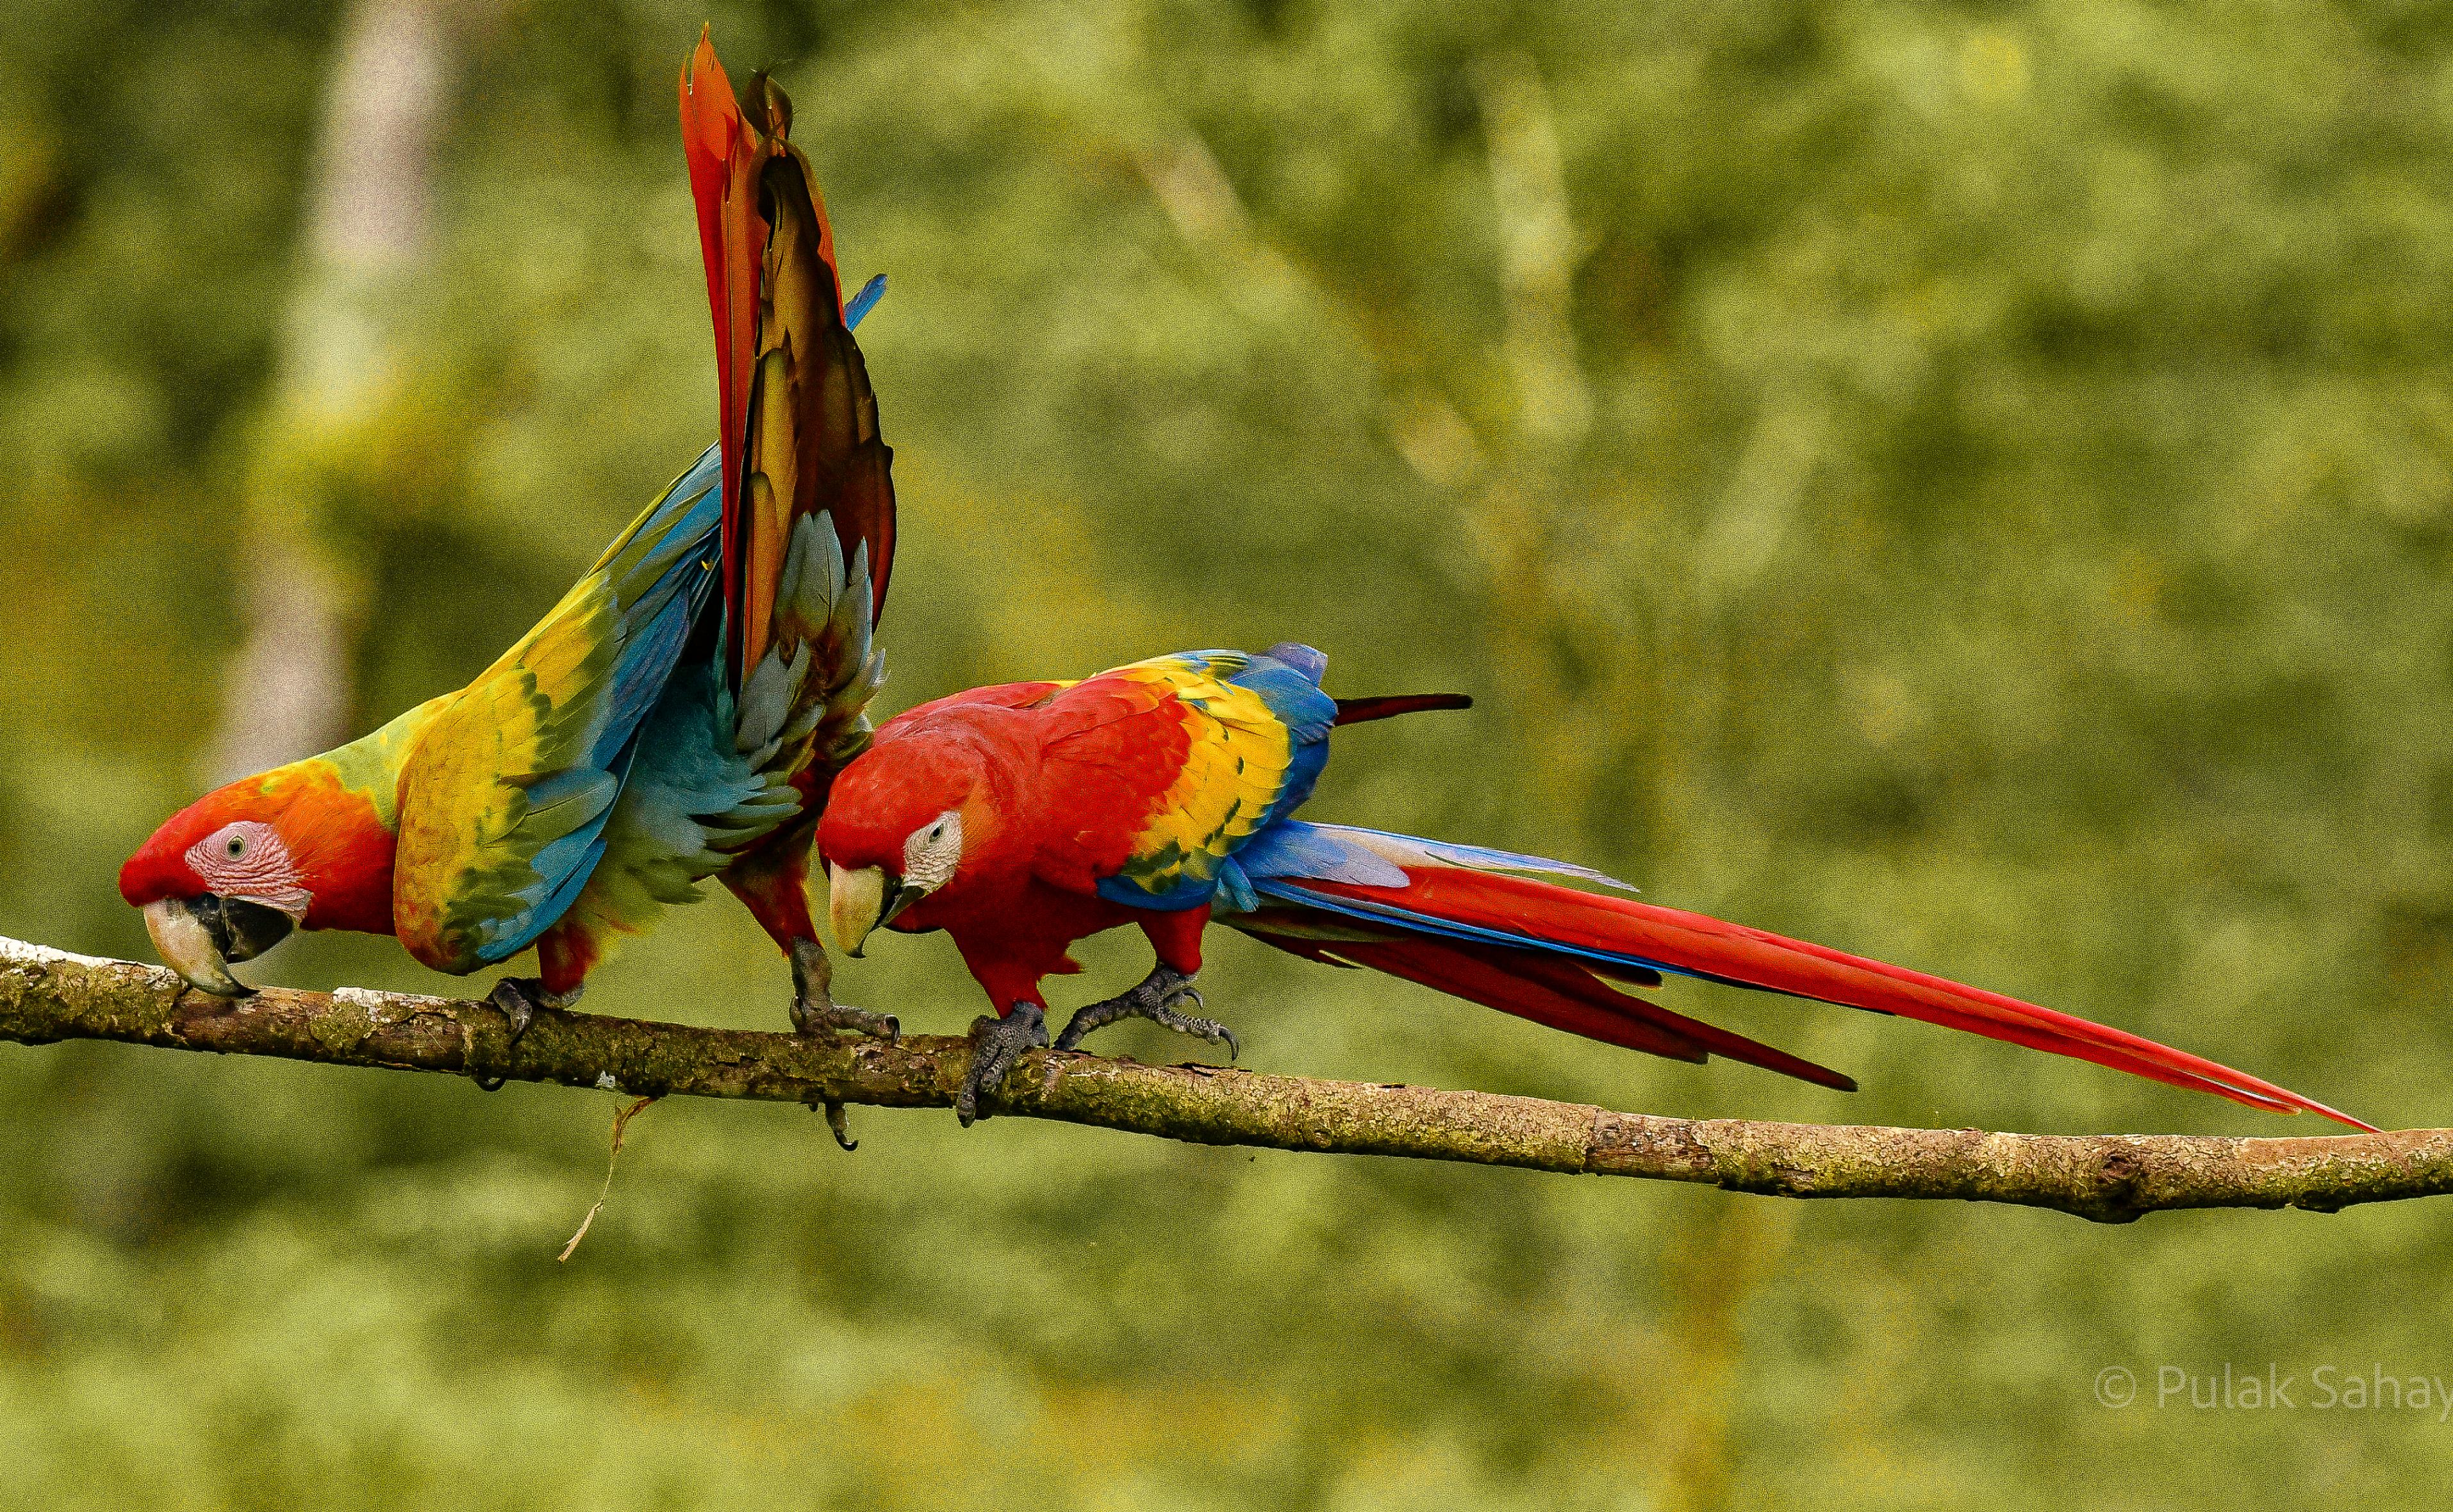 Macaws mating ritual